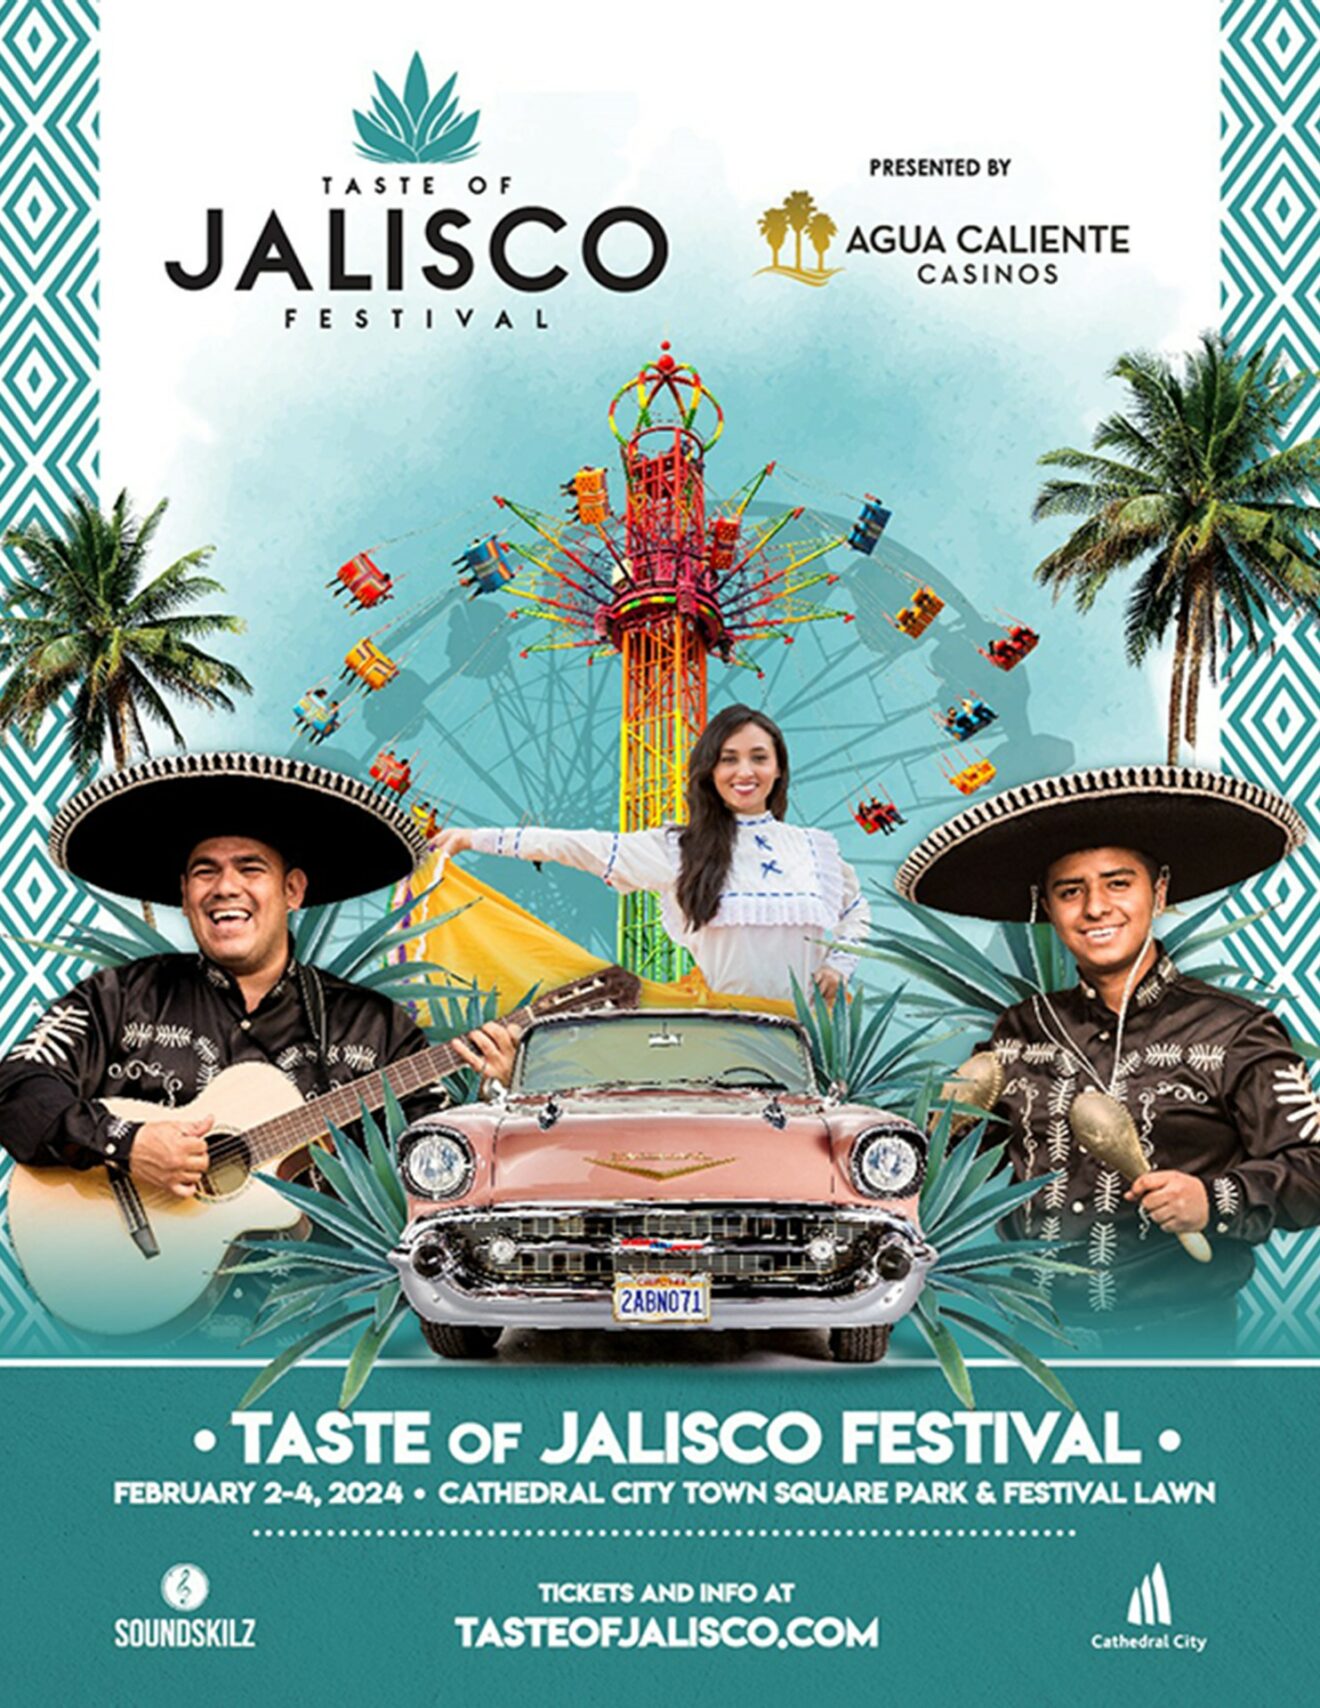 Taste of Jalisco